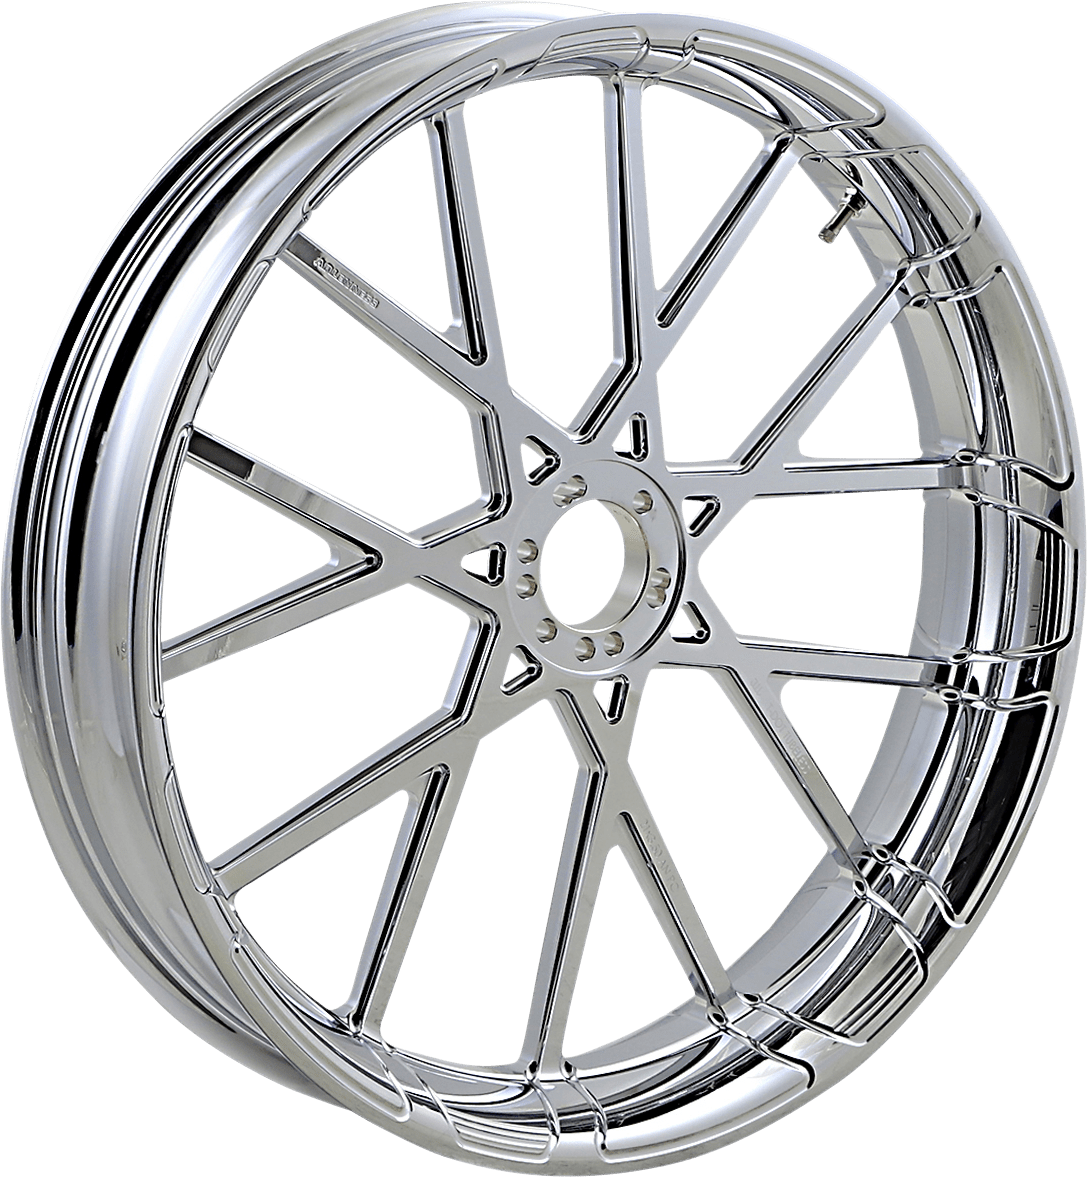 ARLEN NESS-Procross Forged Billet Rims-Wheels-MetalCore Harley Supply